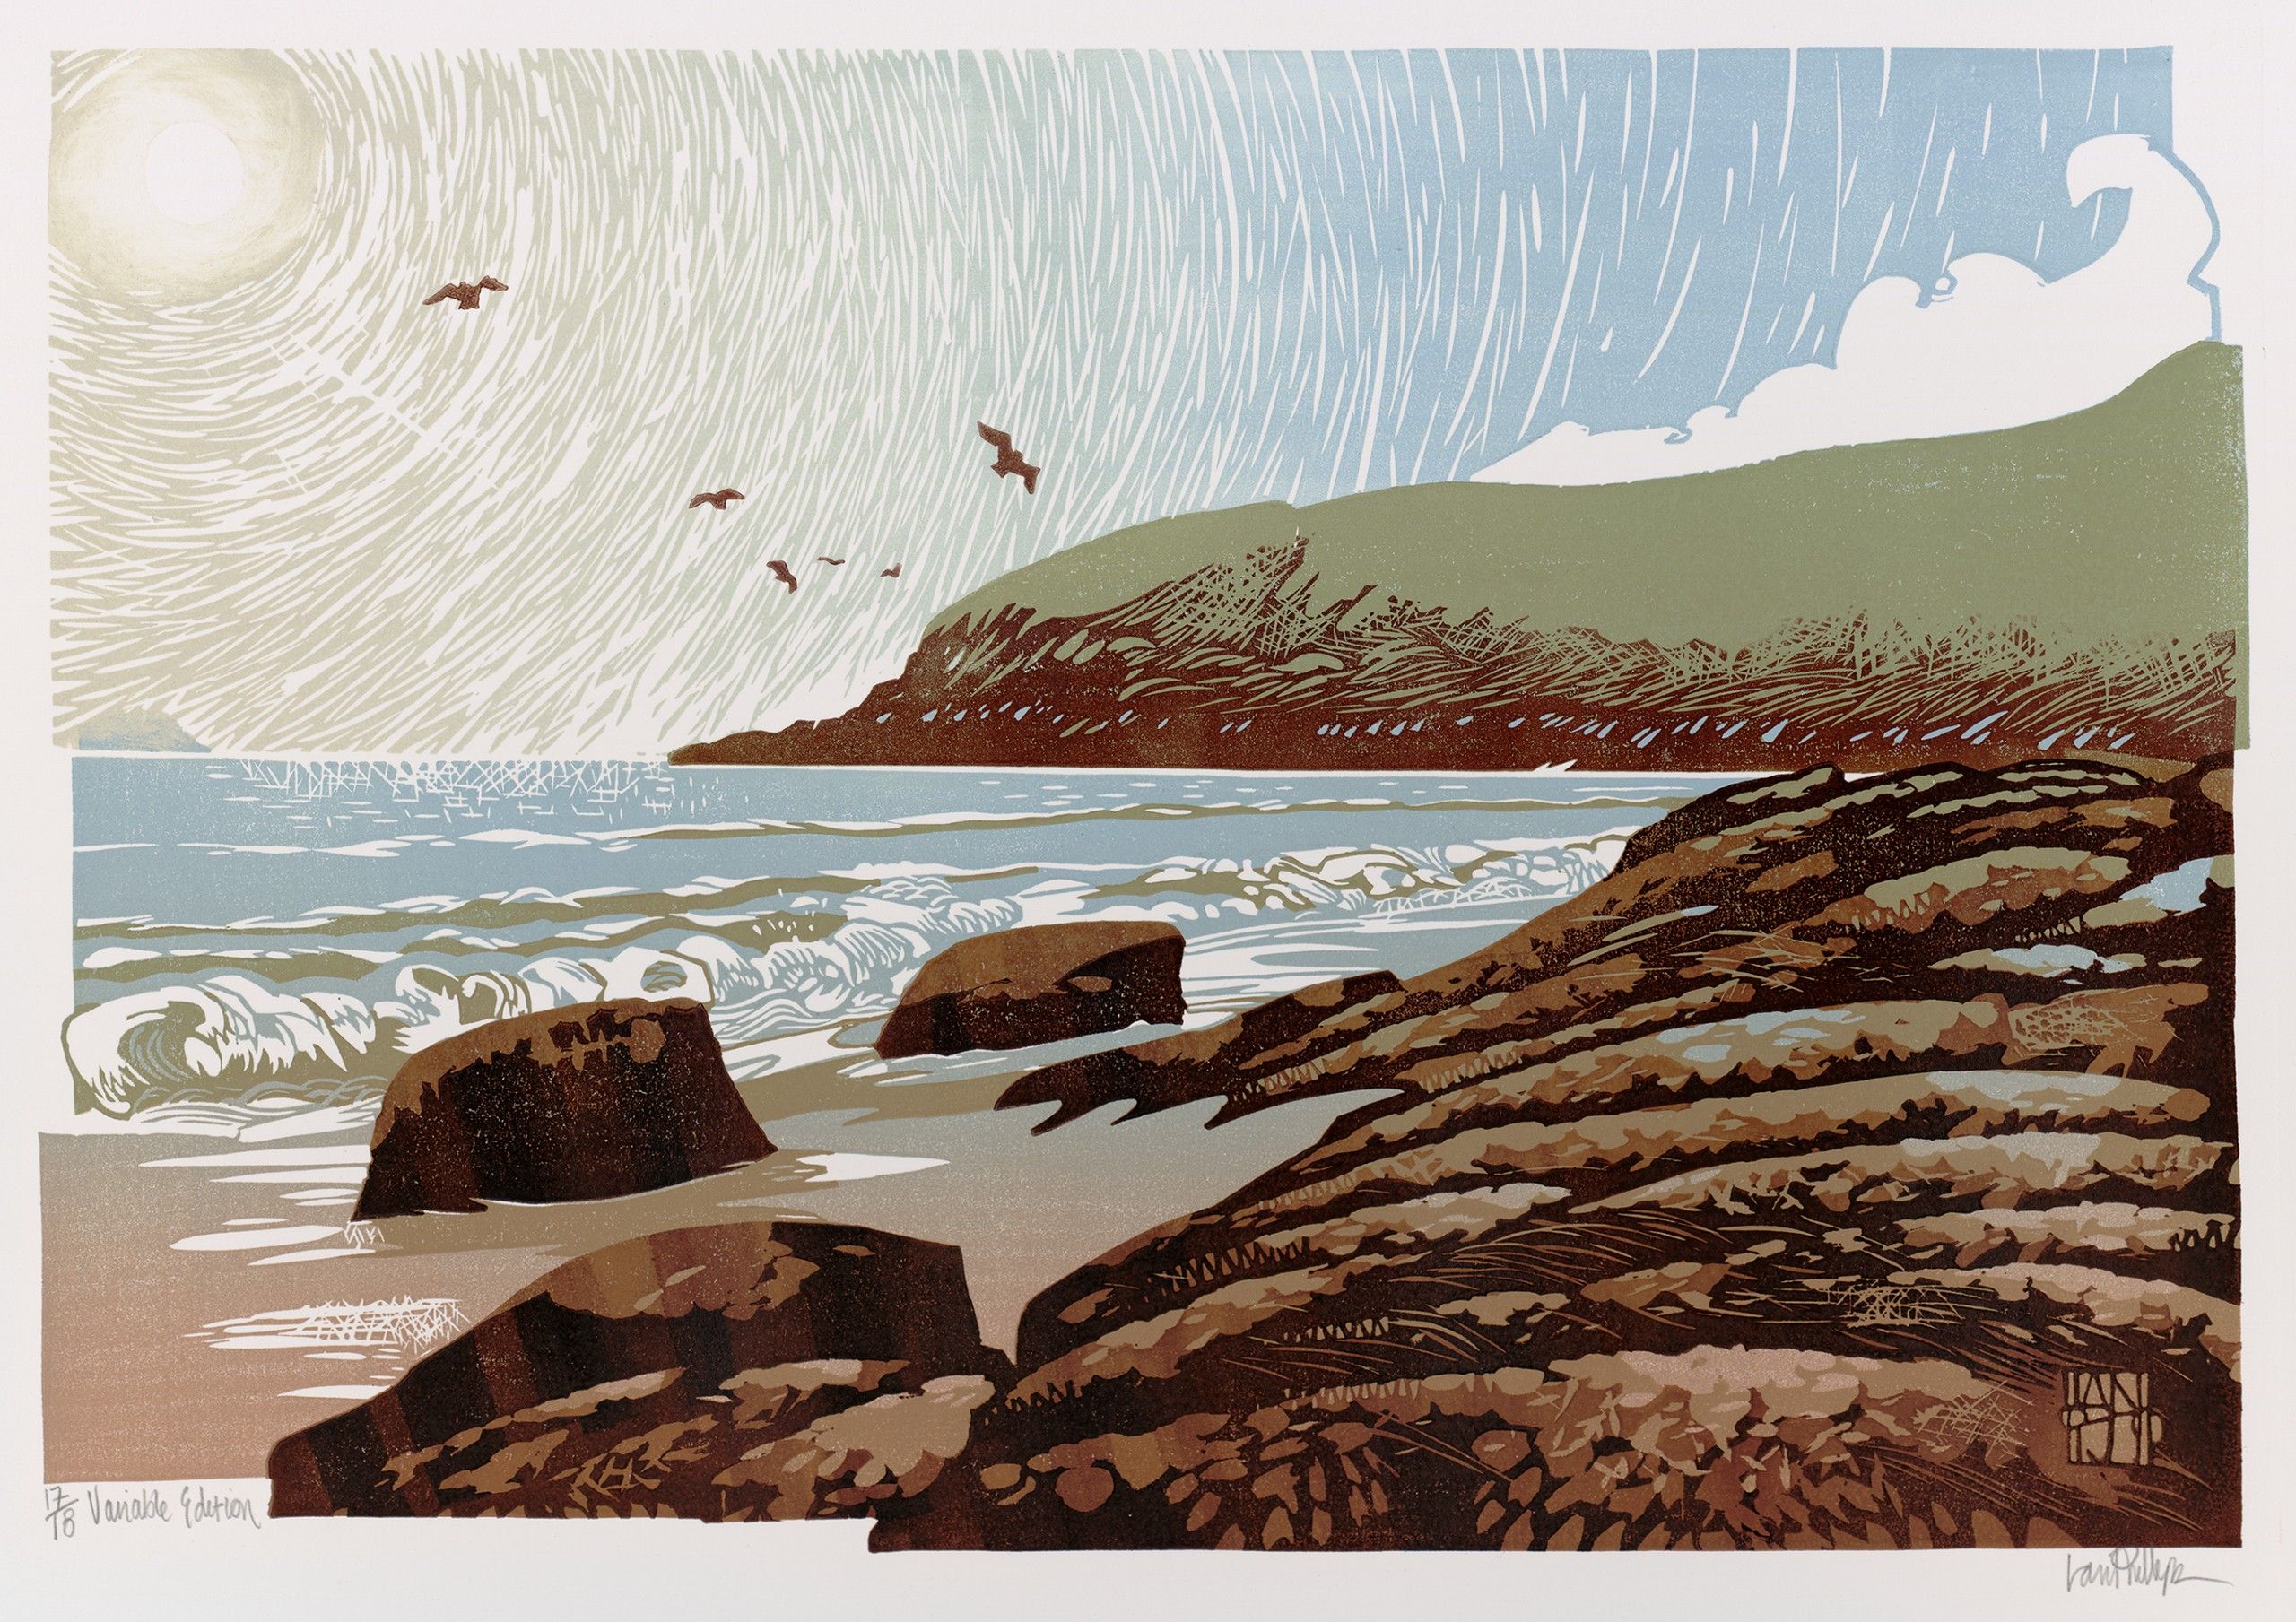 Sunshine Seagulls by Ian Phillips